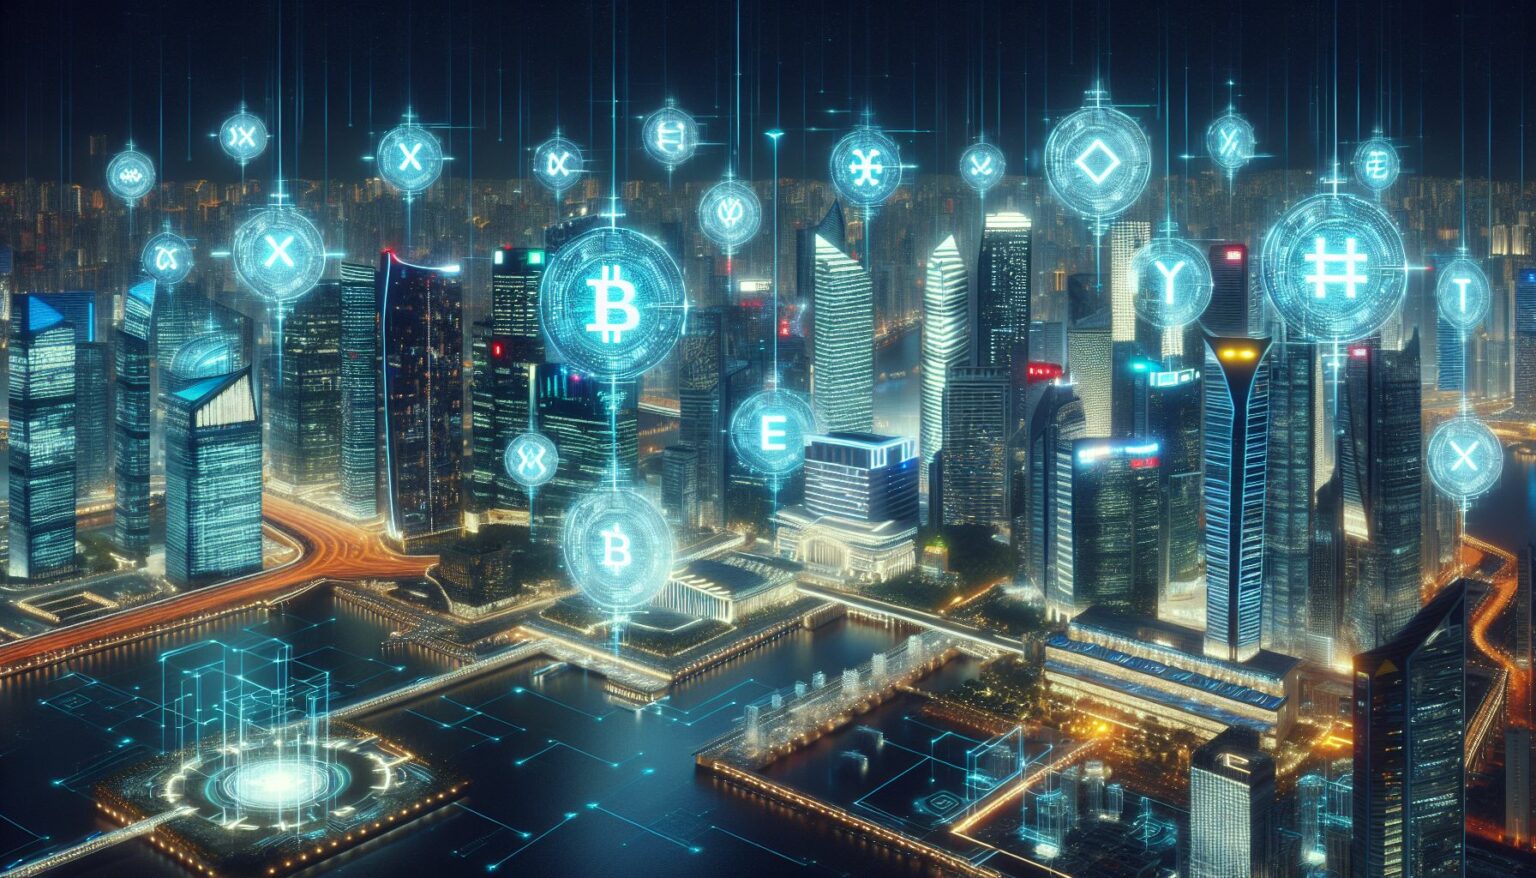 futuristic city with digital currency symbols